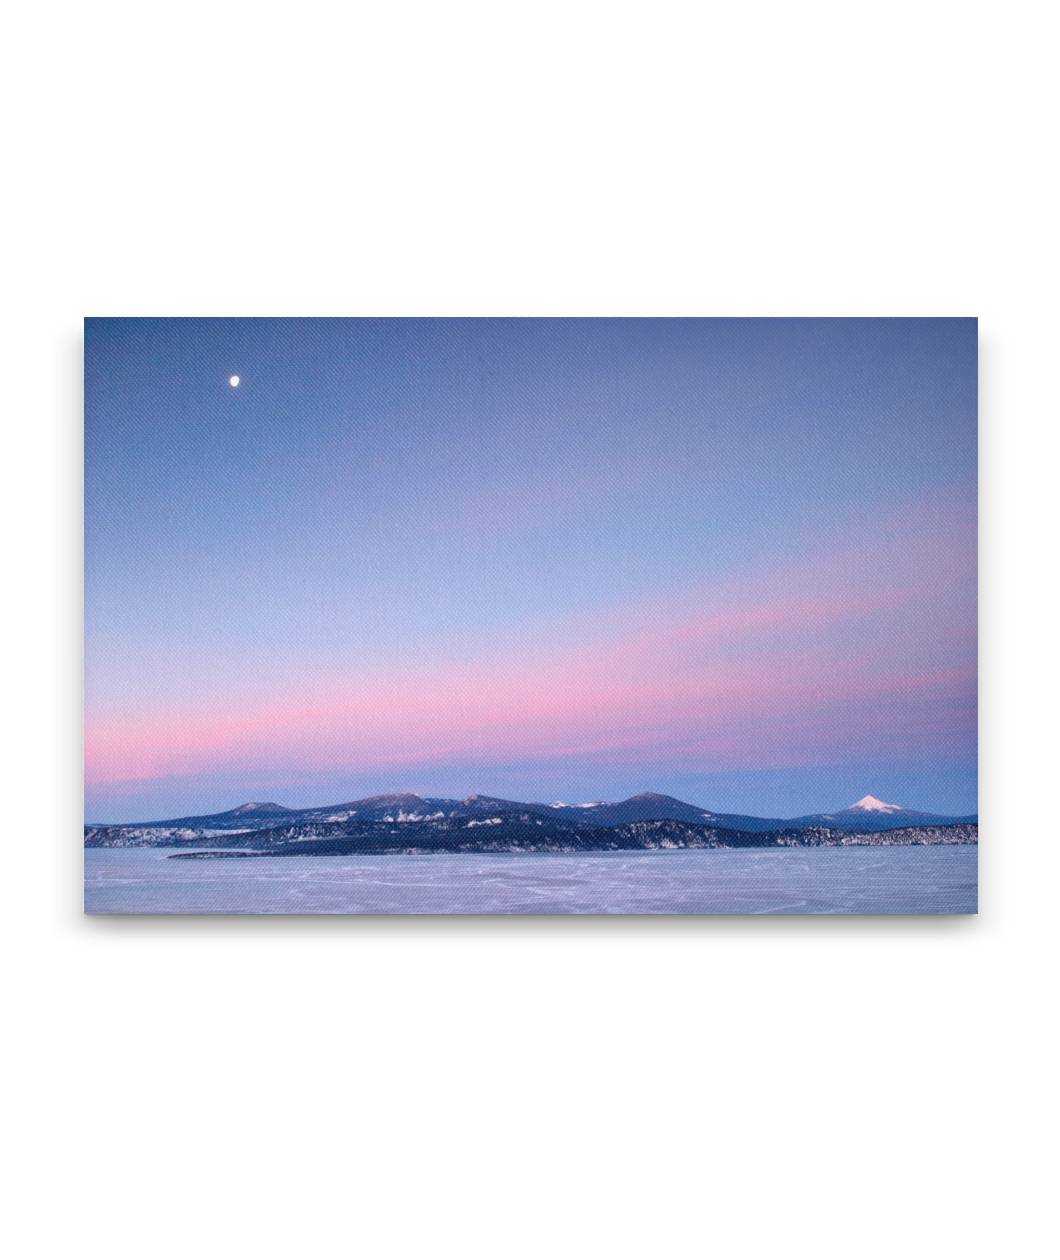 Moonrise and Mountain Lakes Wilderness at Sunrise, Agency lake, Oregon